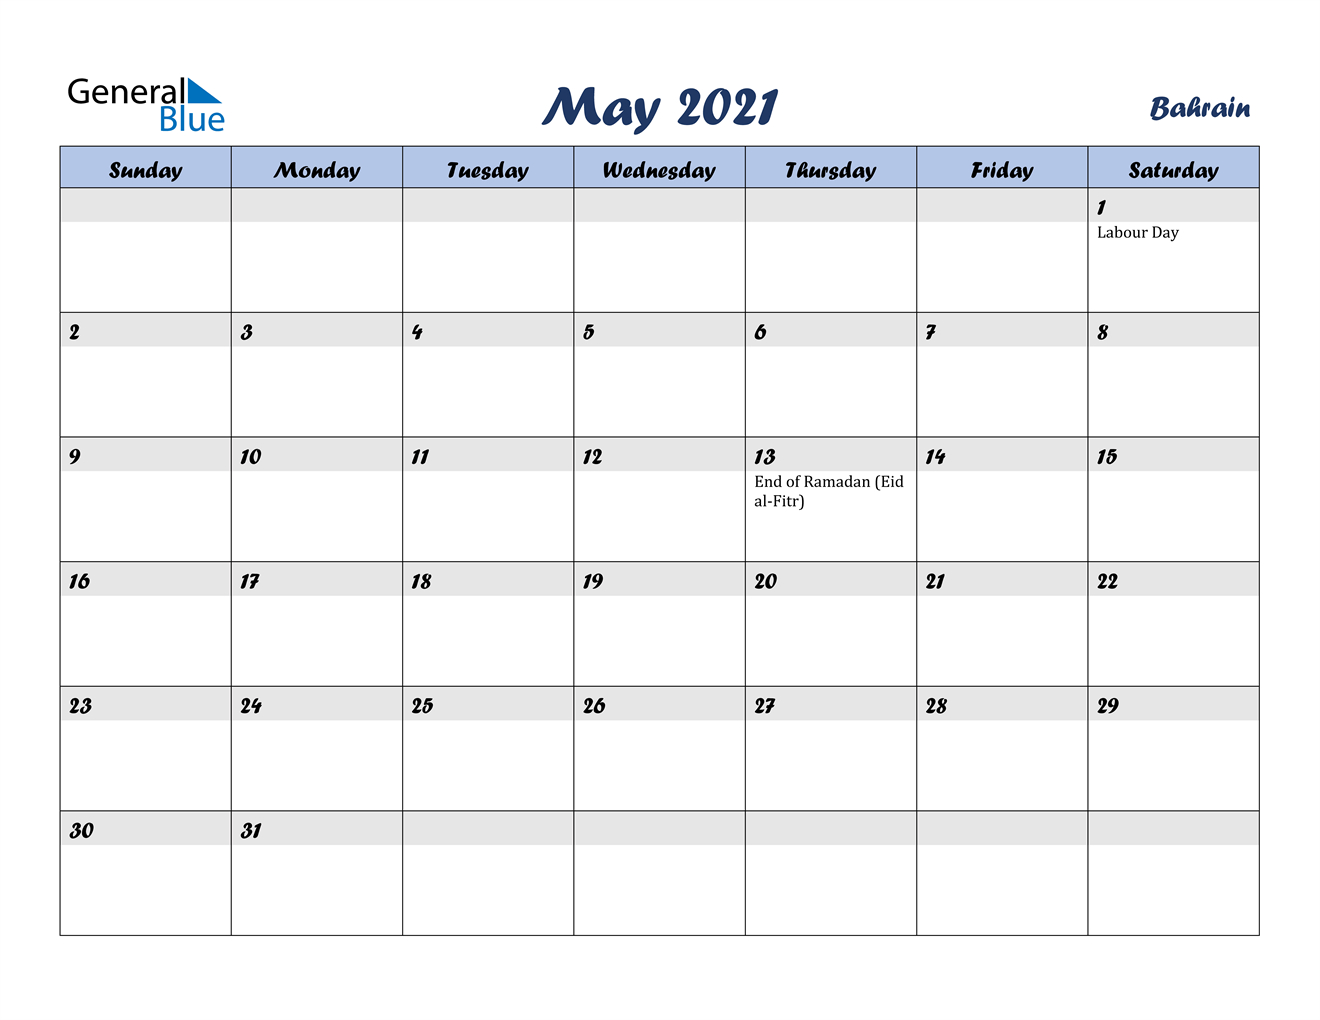 May 2021 Calendar - Bahrain